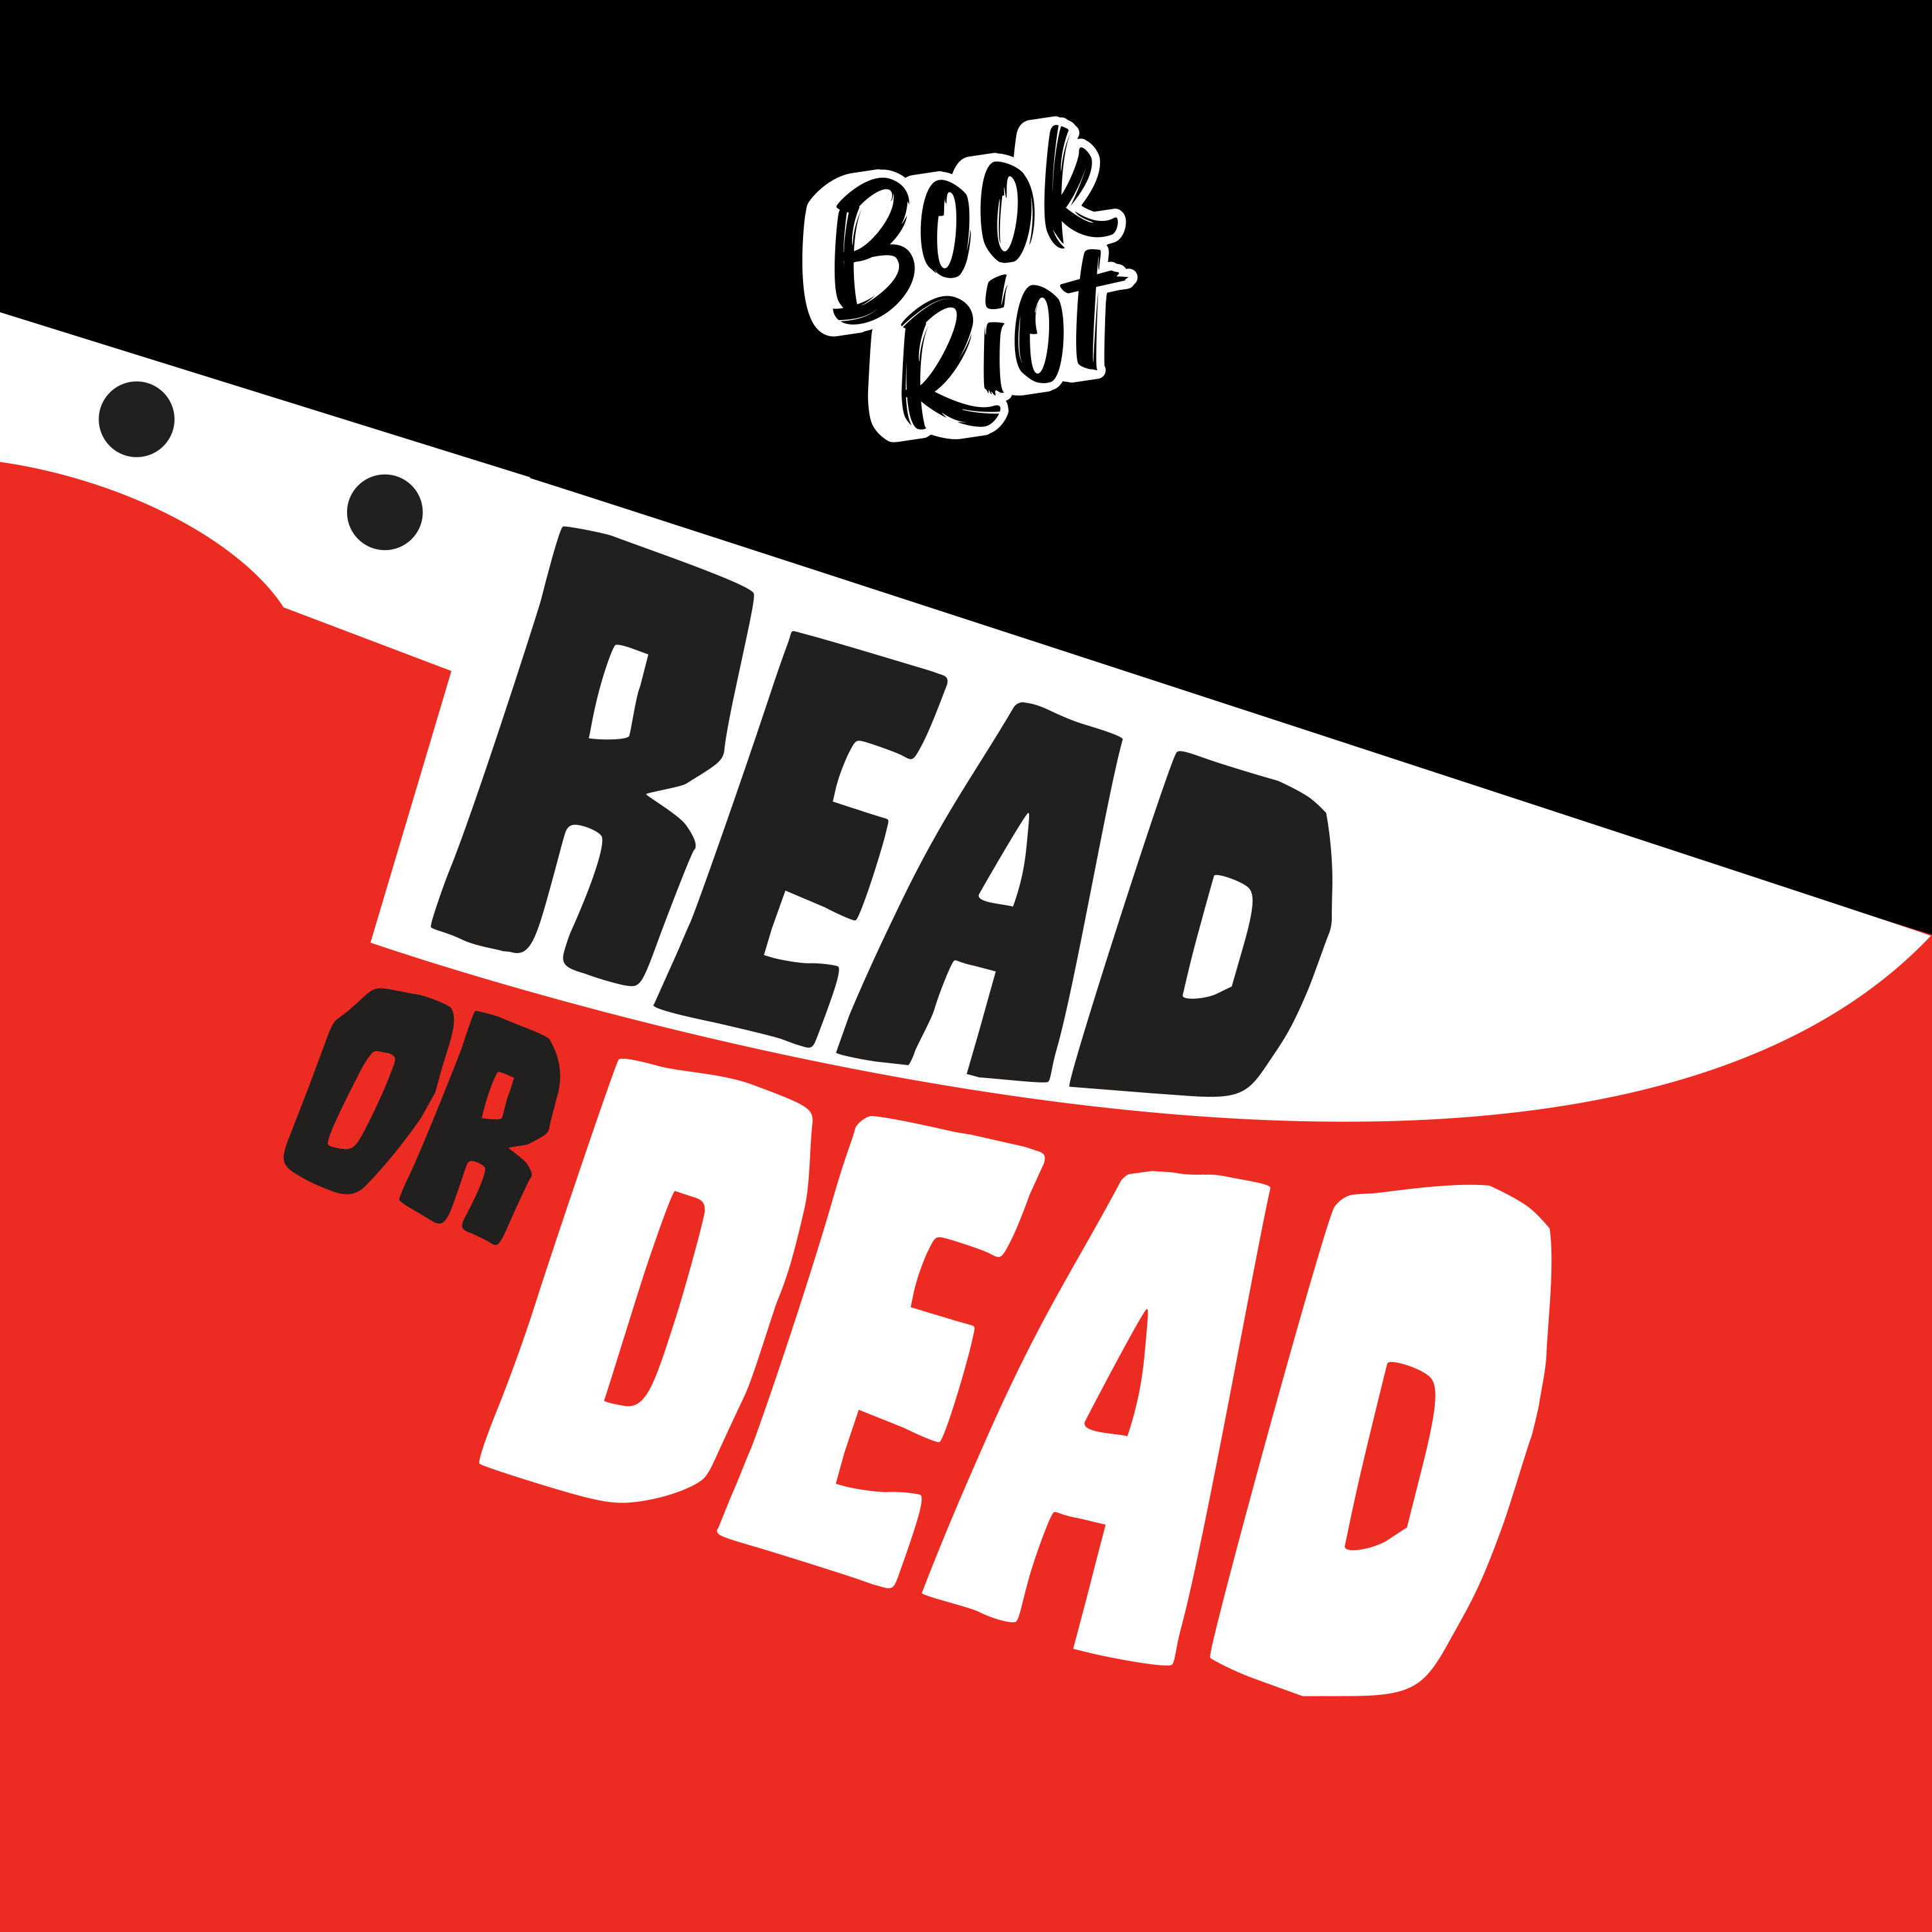 Read or Dead